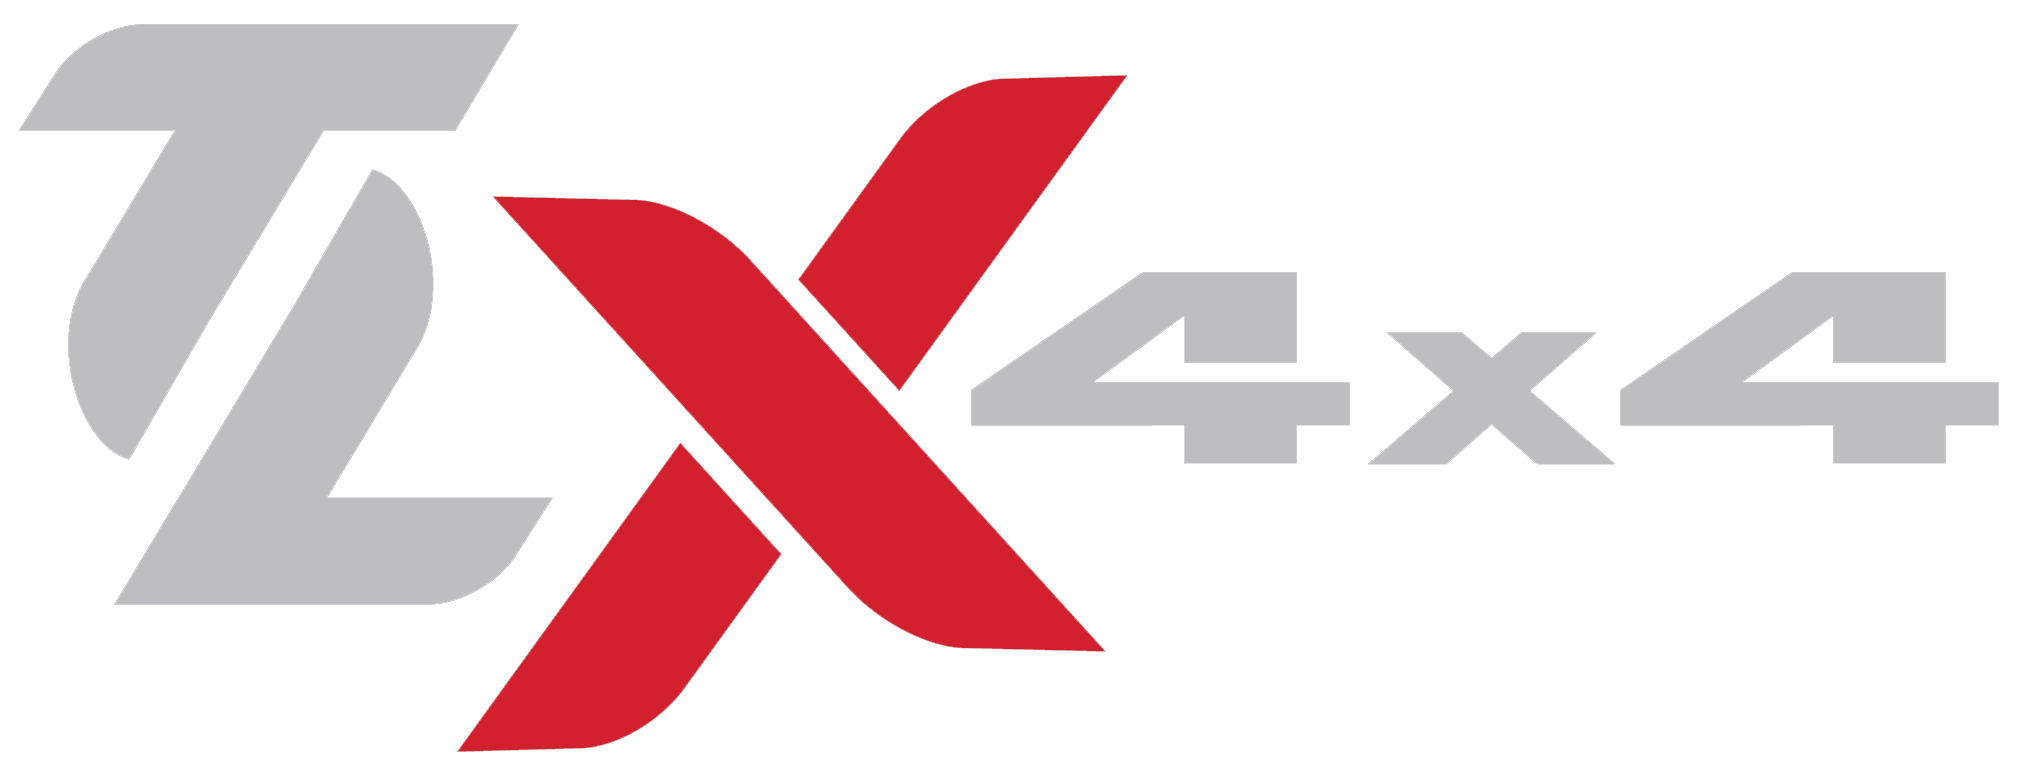 TLX4x4-logo-03